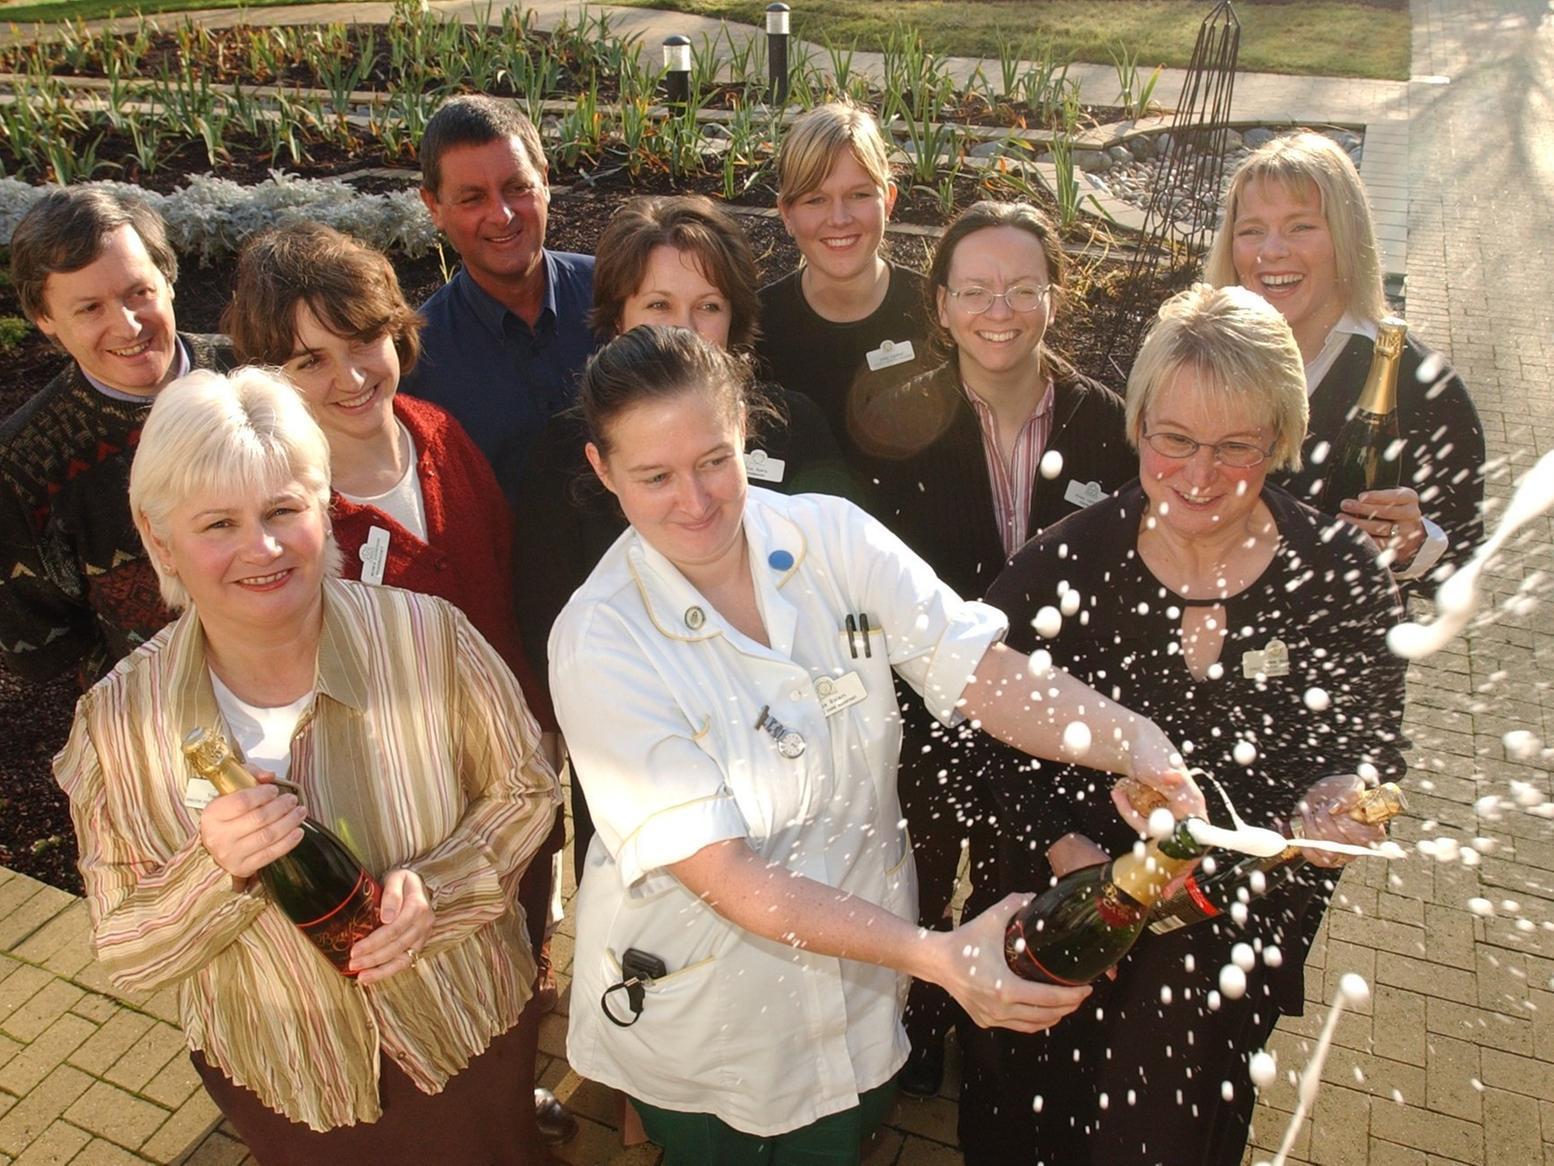 St Gemma's staff celebrate the YEP reaching the two million pound mark.